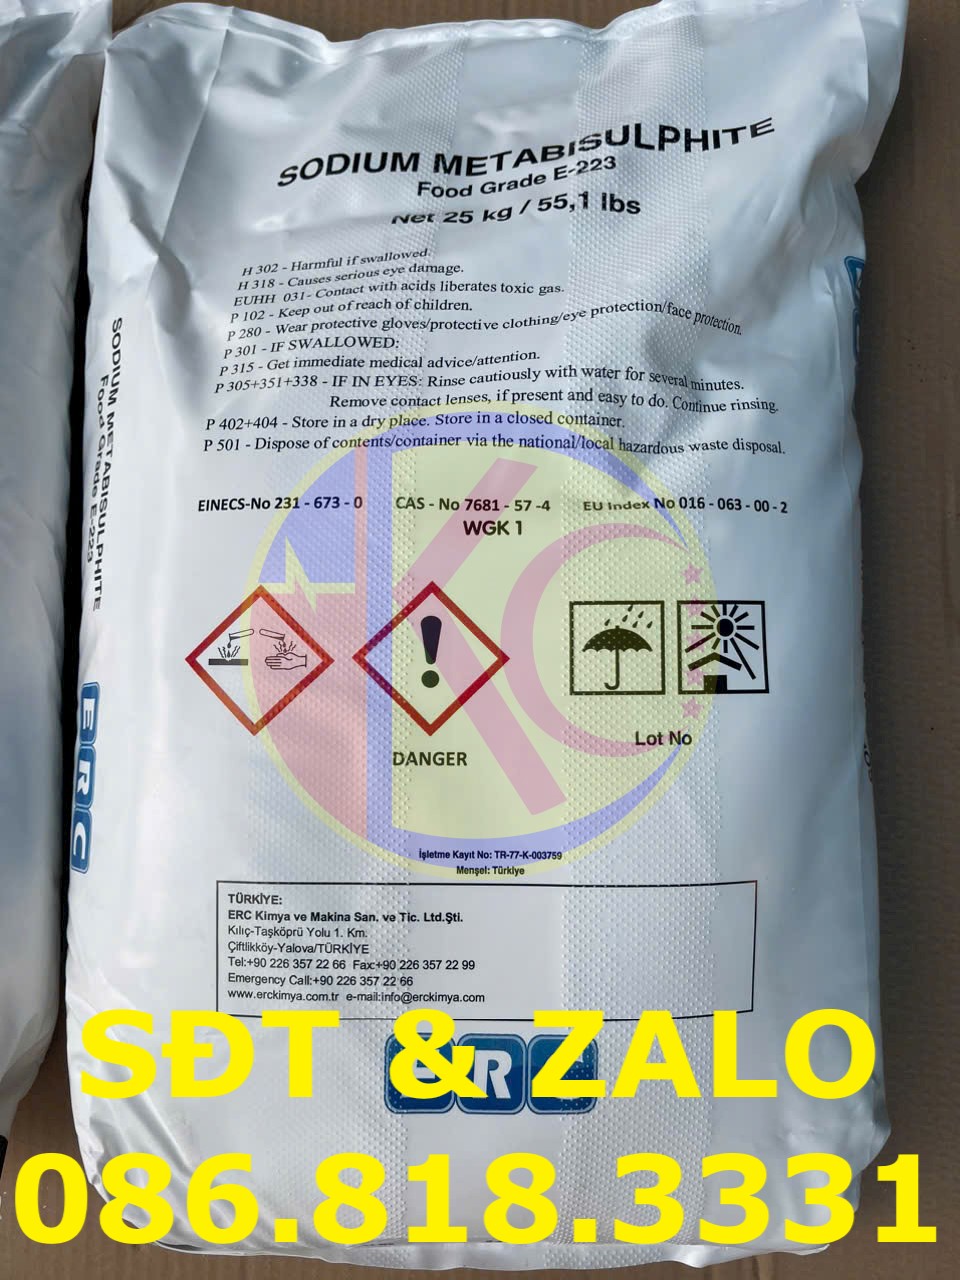 Sodium Metabisulfite - Natri Metabisulfit - Na2S2O5 mỹ phẩm